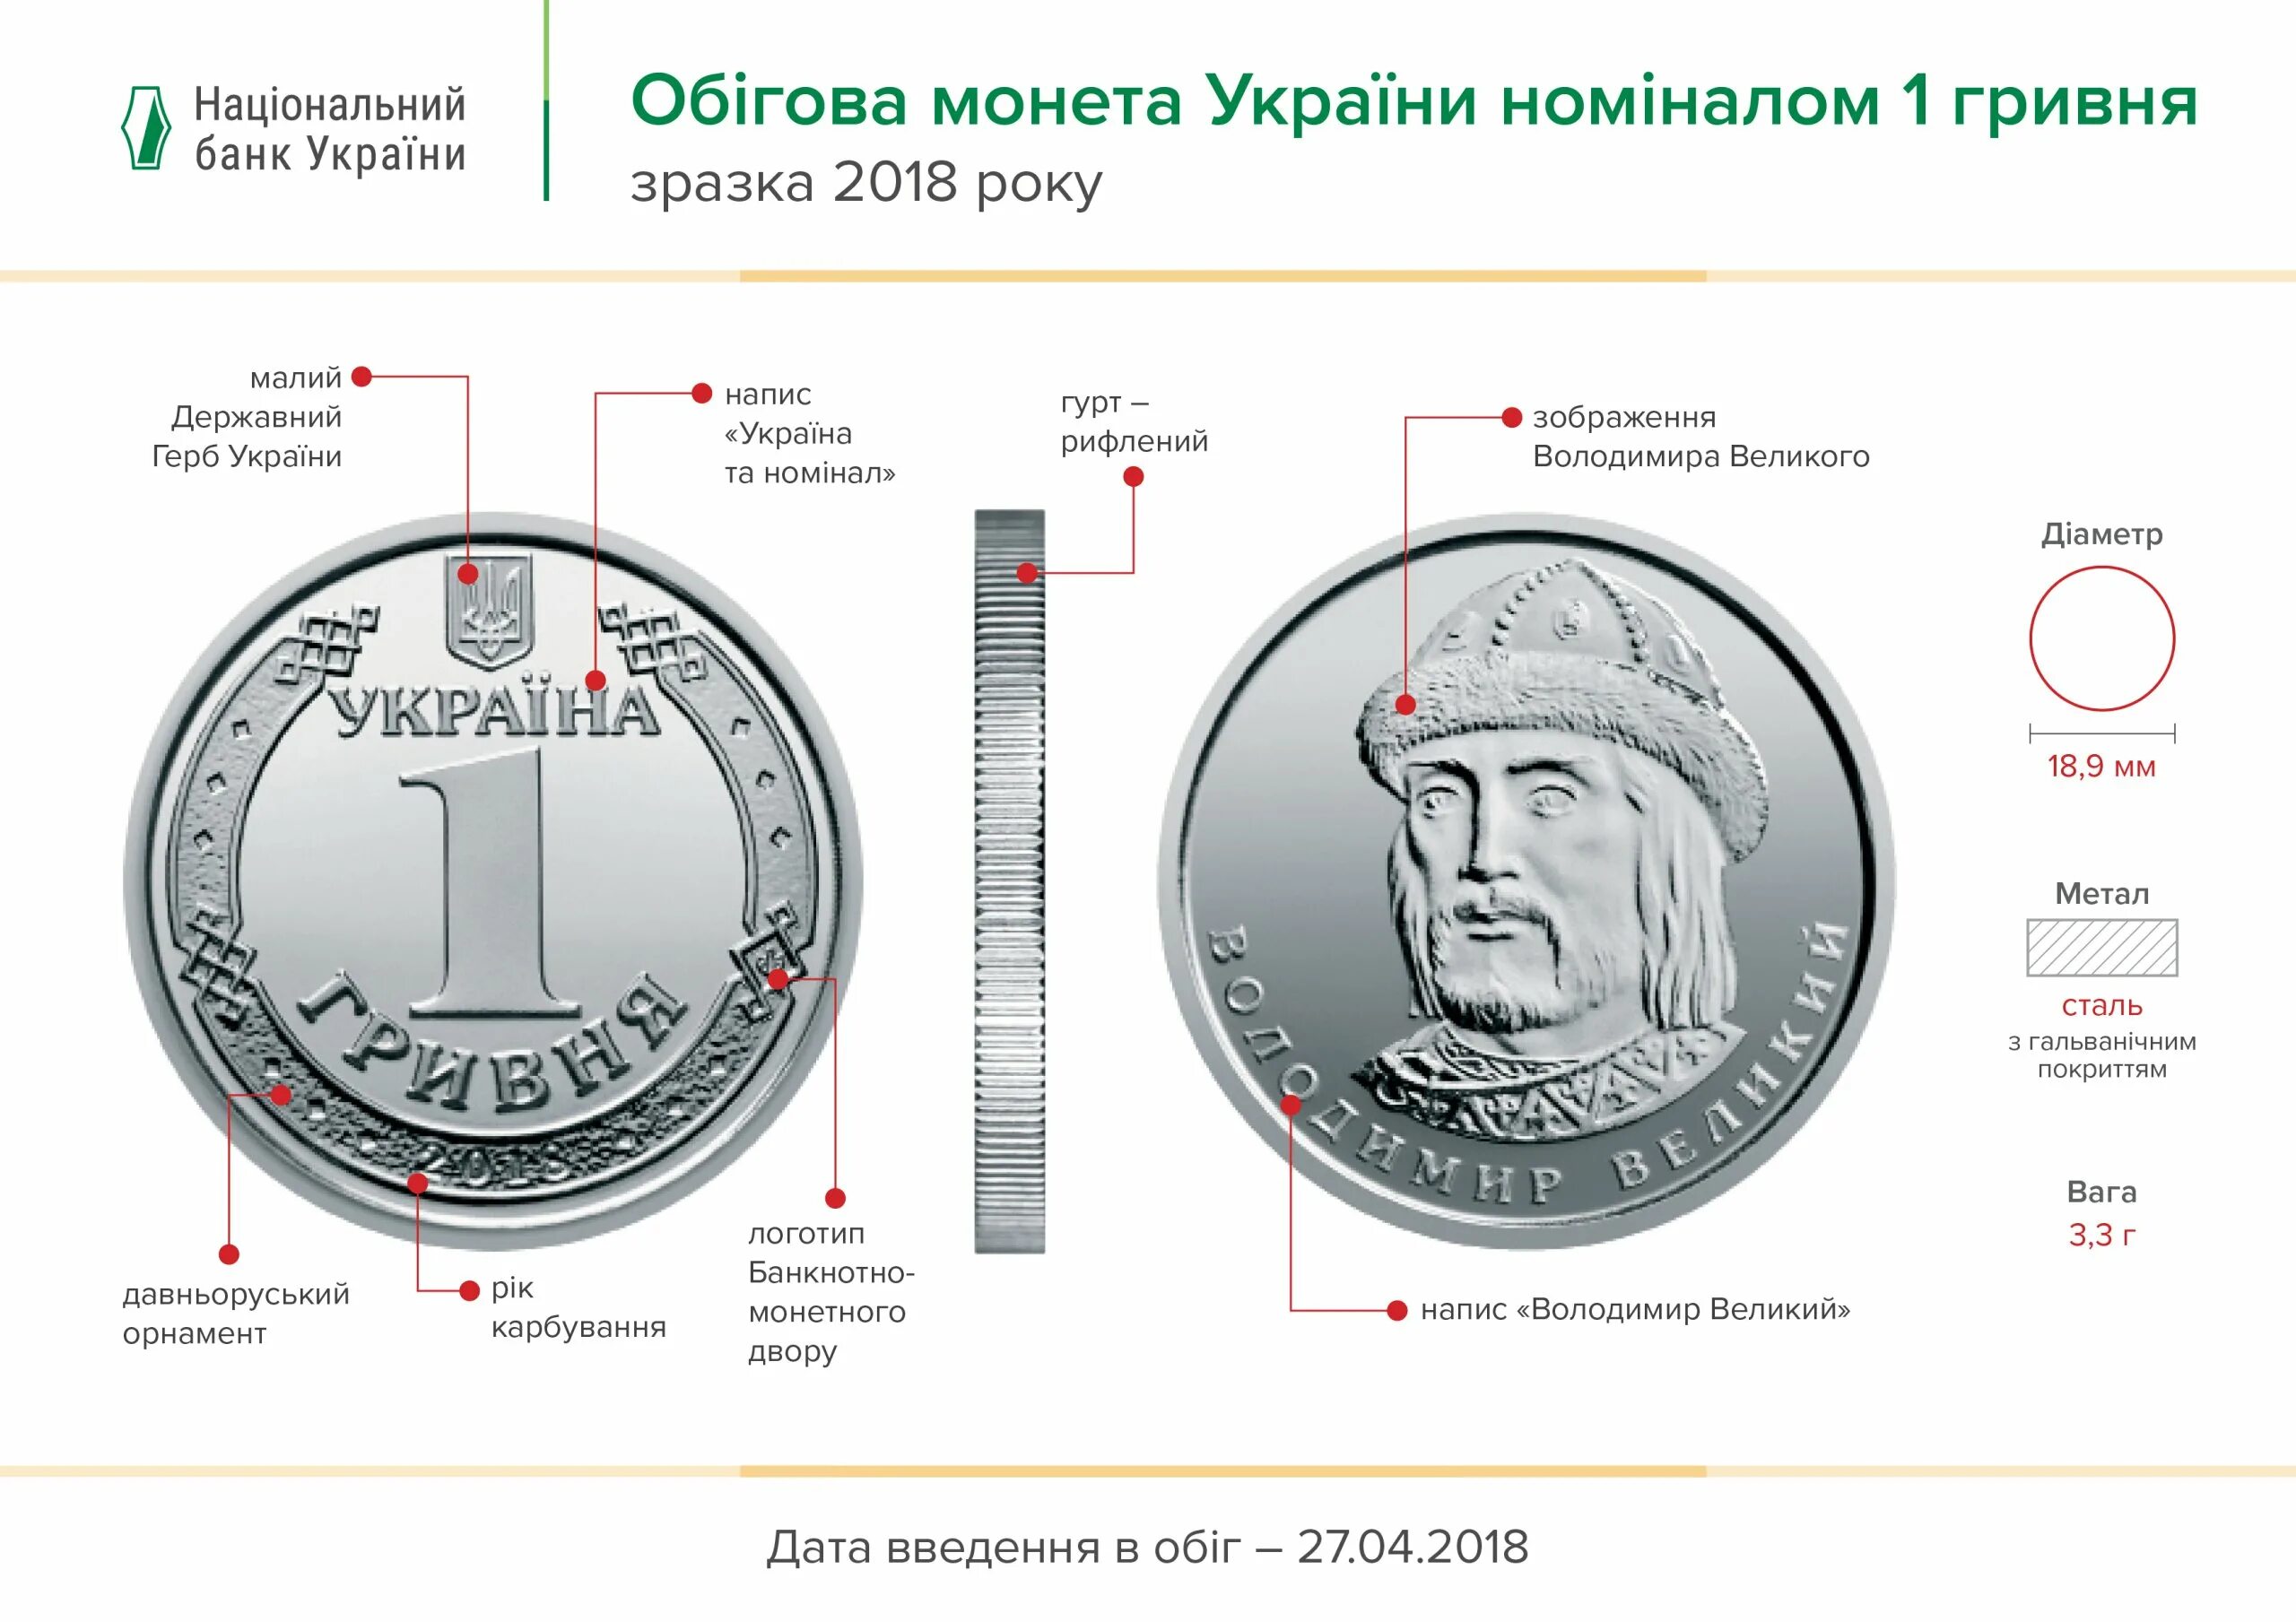 1 Гривна монета. Одна гривна монета. Гривна первая монета. Украинская гривна первая монета.